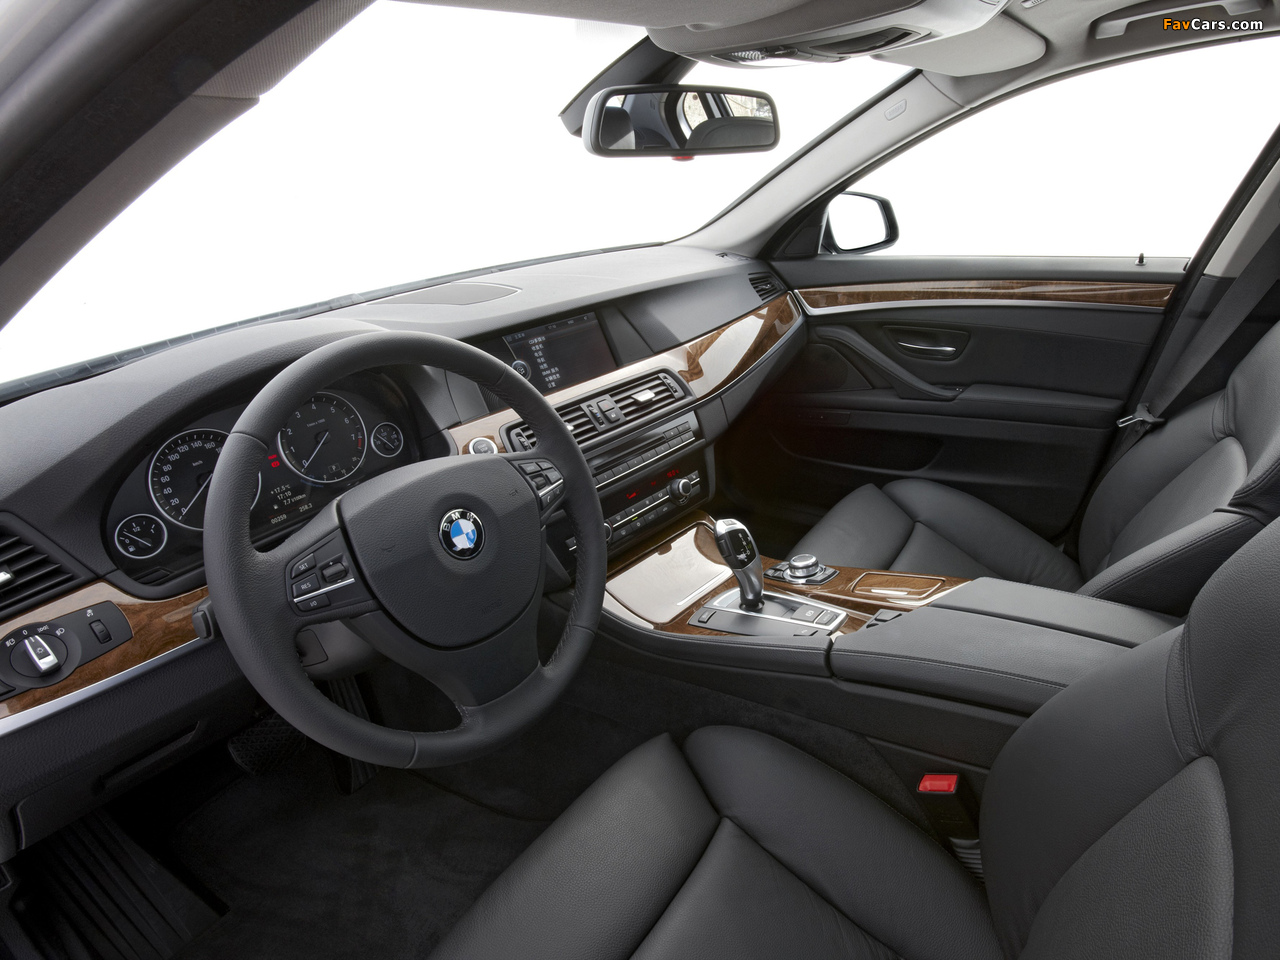 BMW 528Li (F10) 2010 images (1280 x 960)